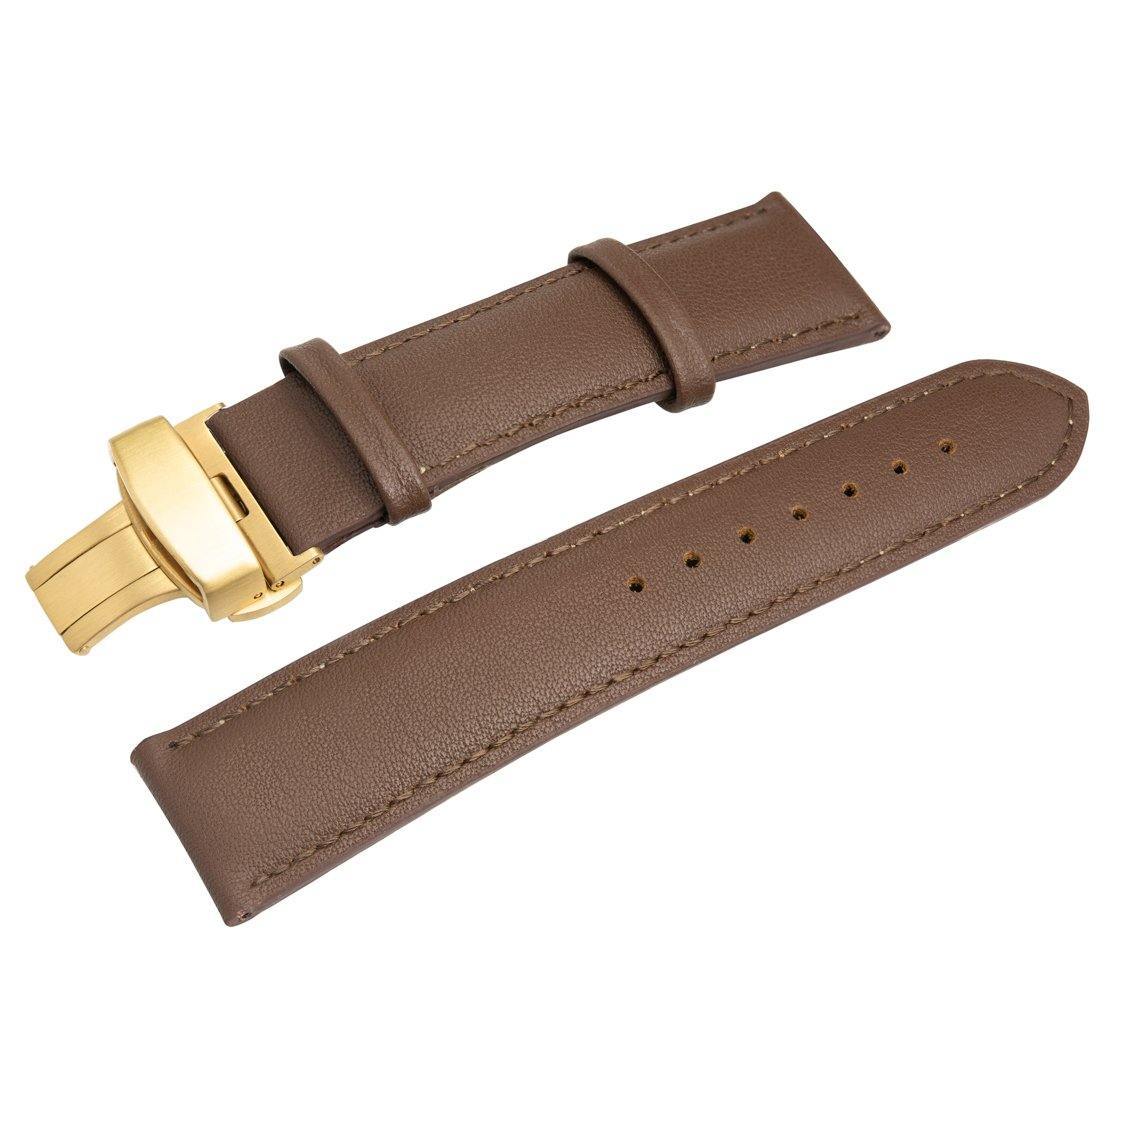 SÖNER HERITAGE E - Non pattern nougat brown leather SÖNER Watch straps.